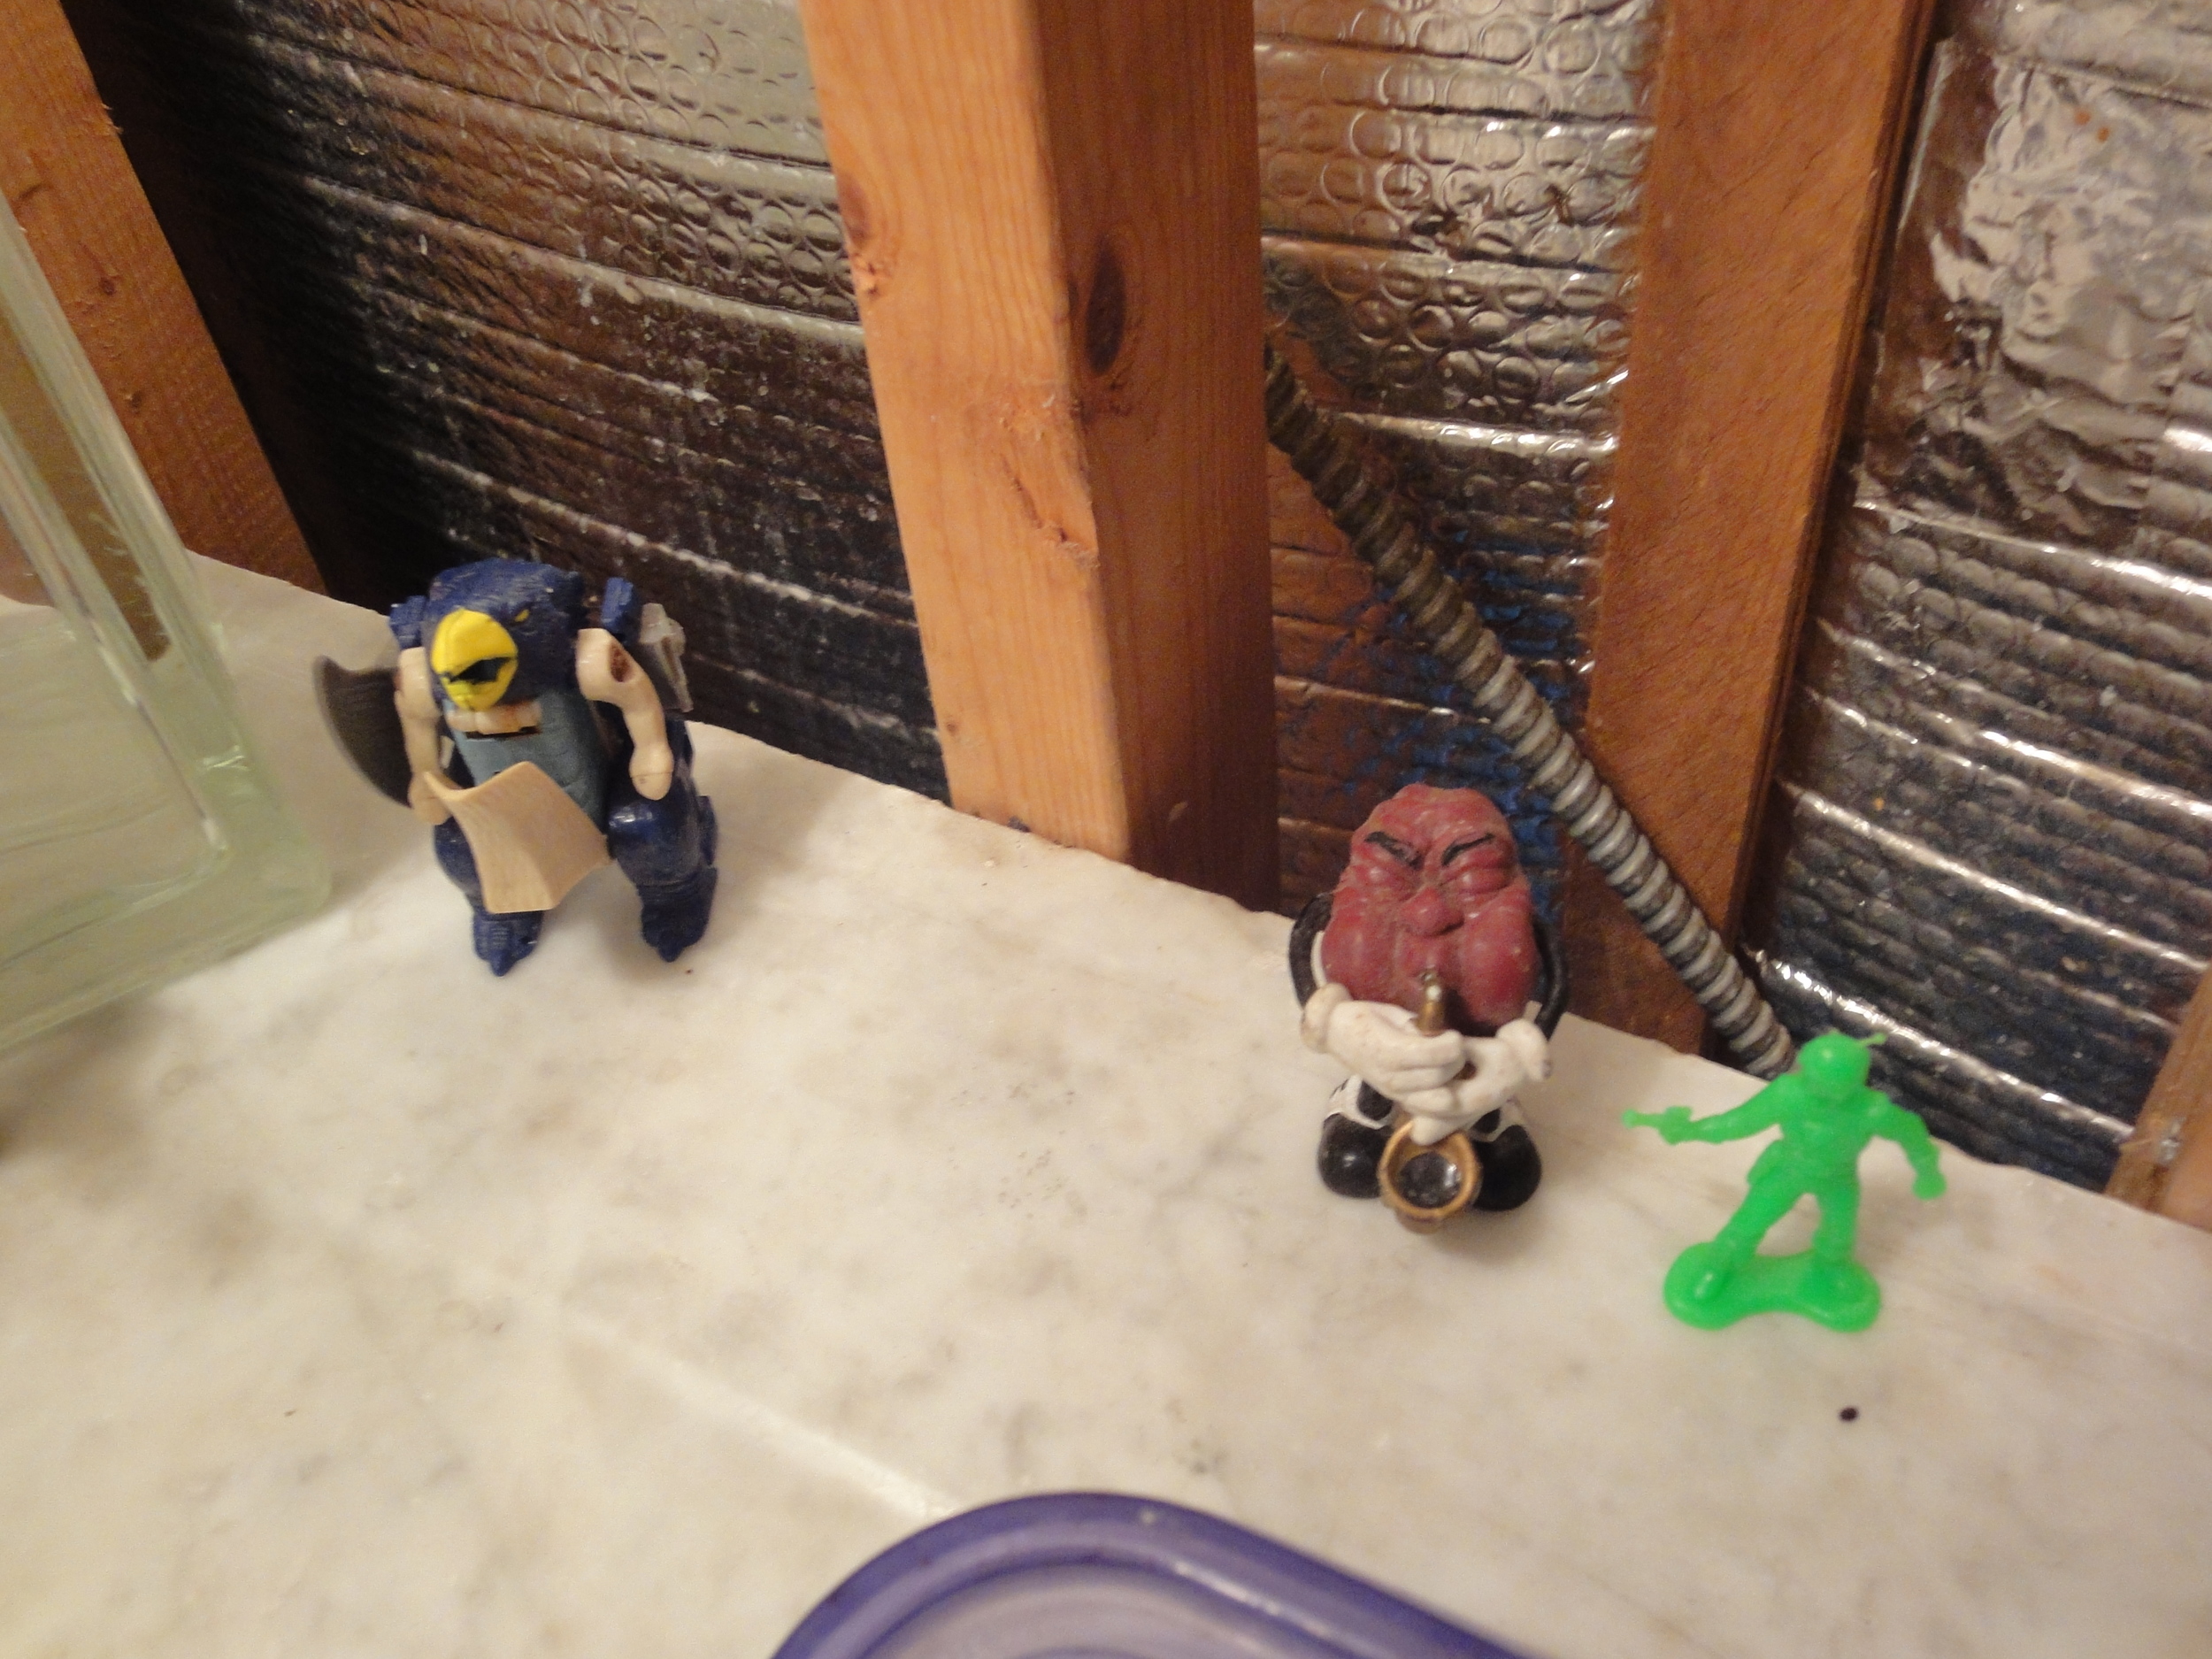 Childhood Toys on Bathroom Sink (2).JPG